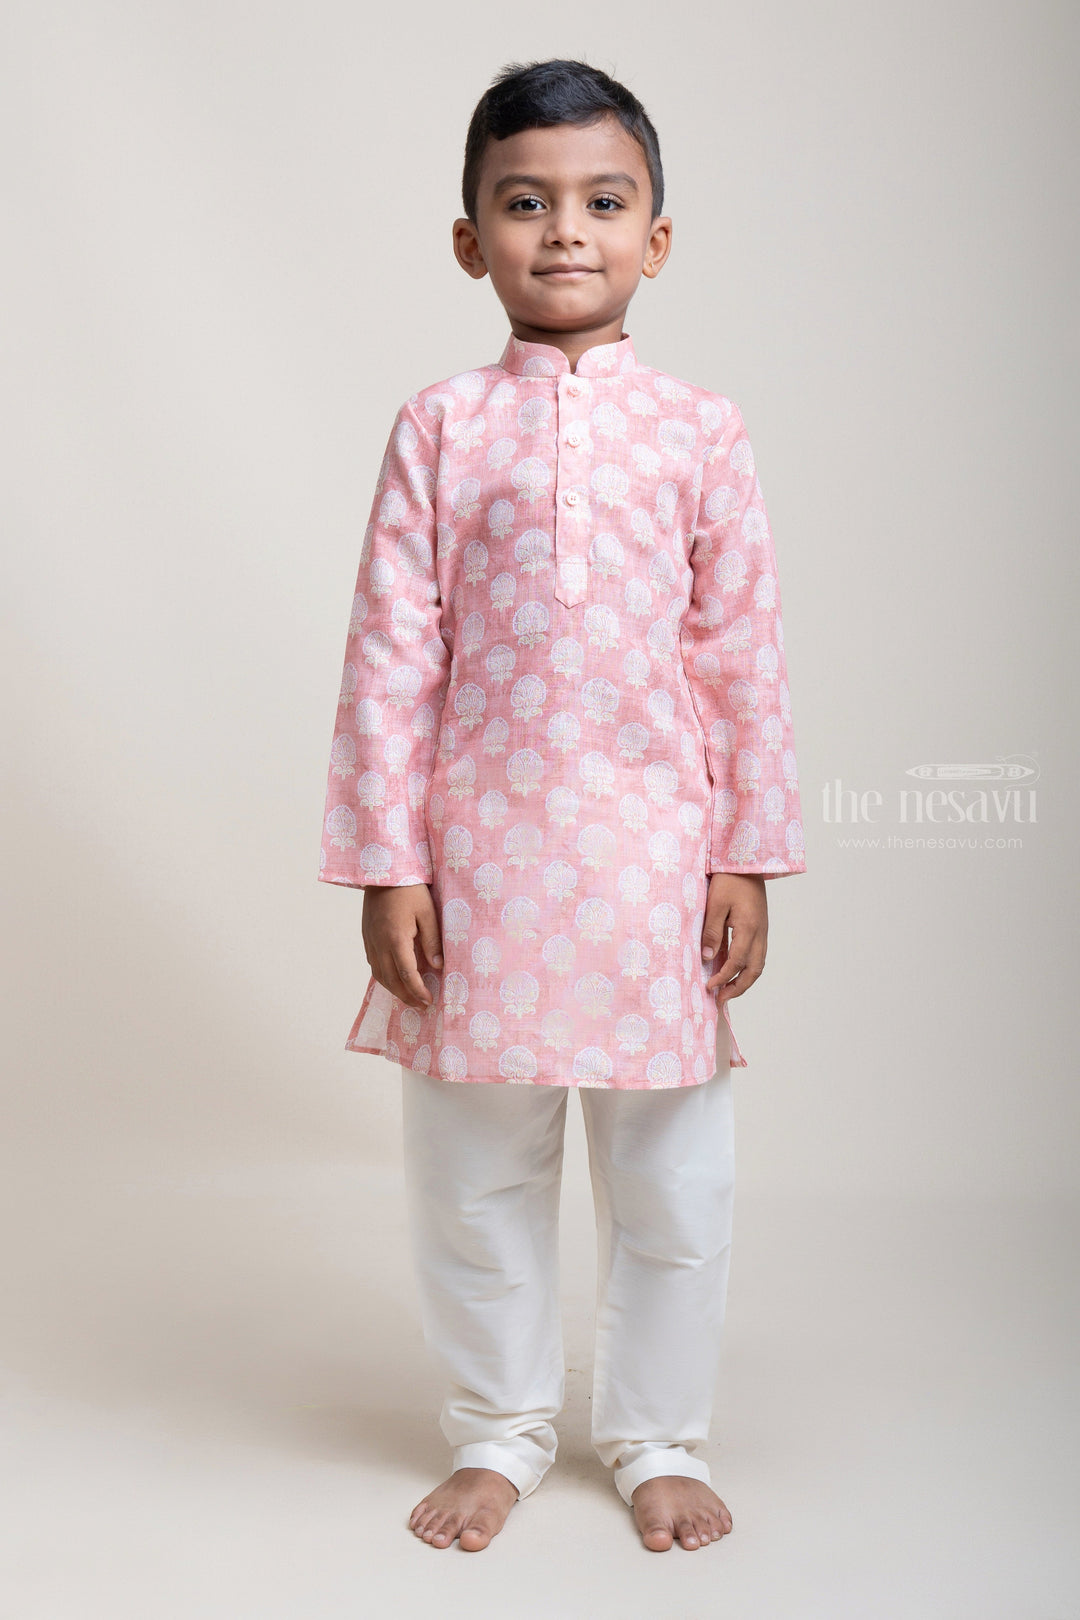 The Nesavu Boys Kurtha Set Mughal Floral Printed Peach Kurta And Elastic White Pants For Little Boys psr silks Nesavu 14 (6M) / Pink / Linen BES249B